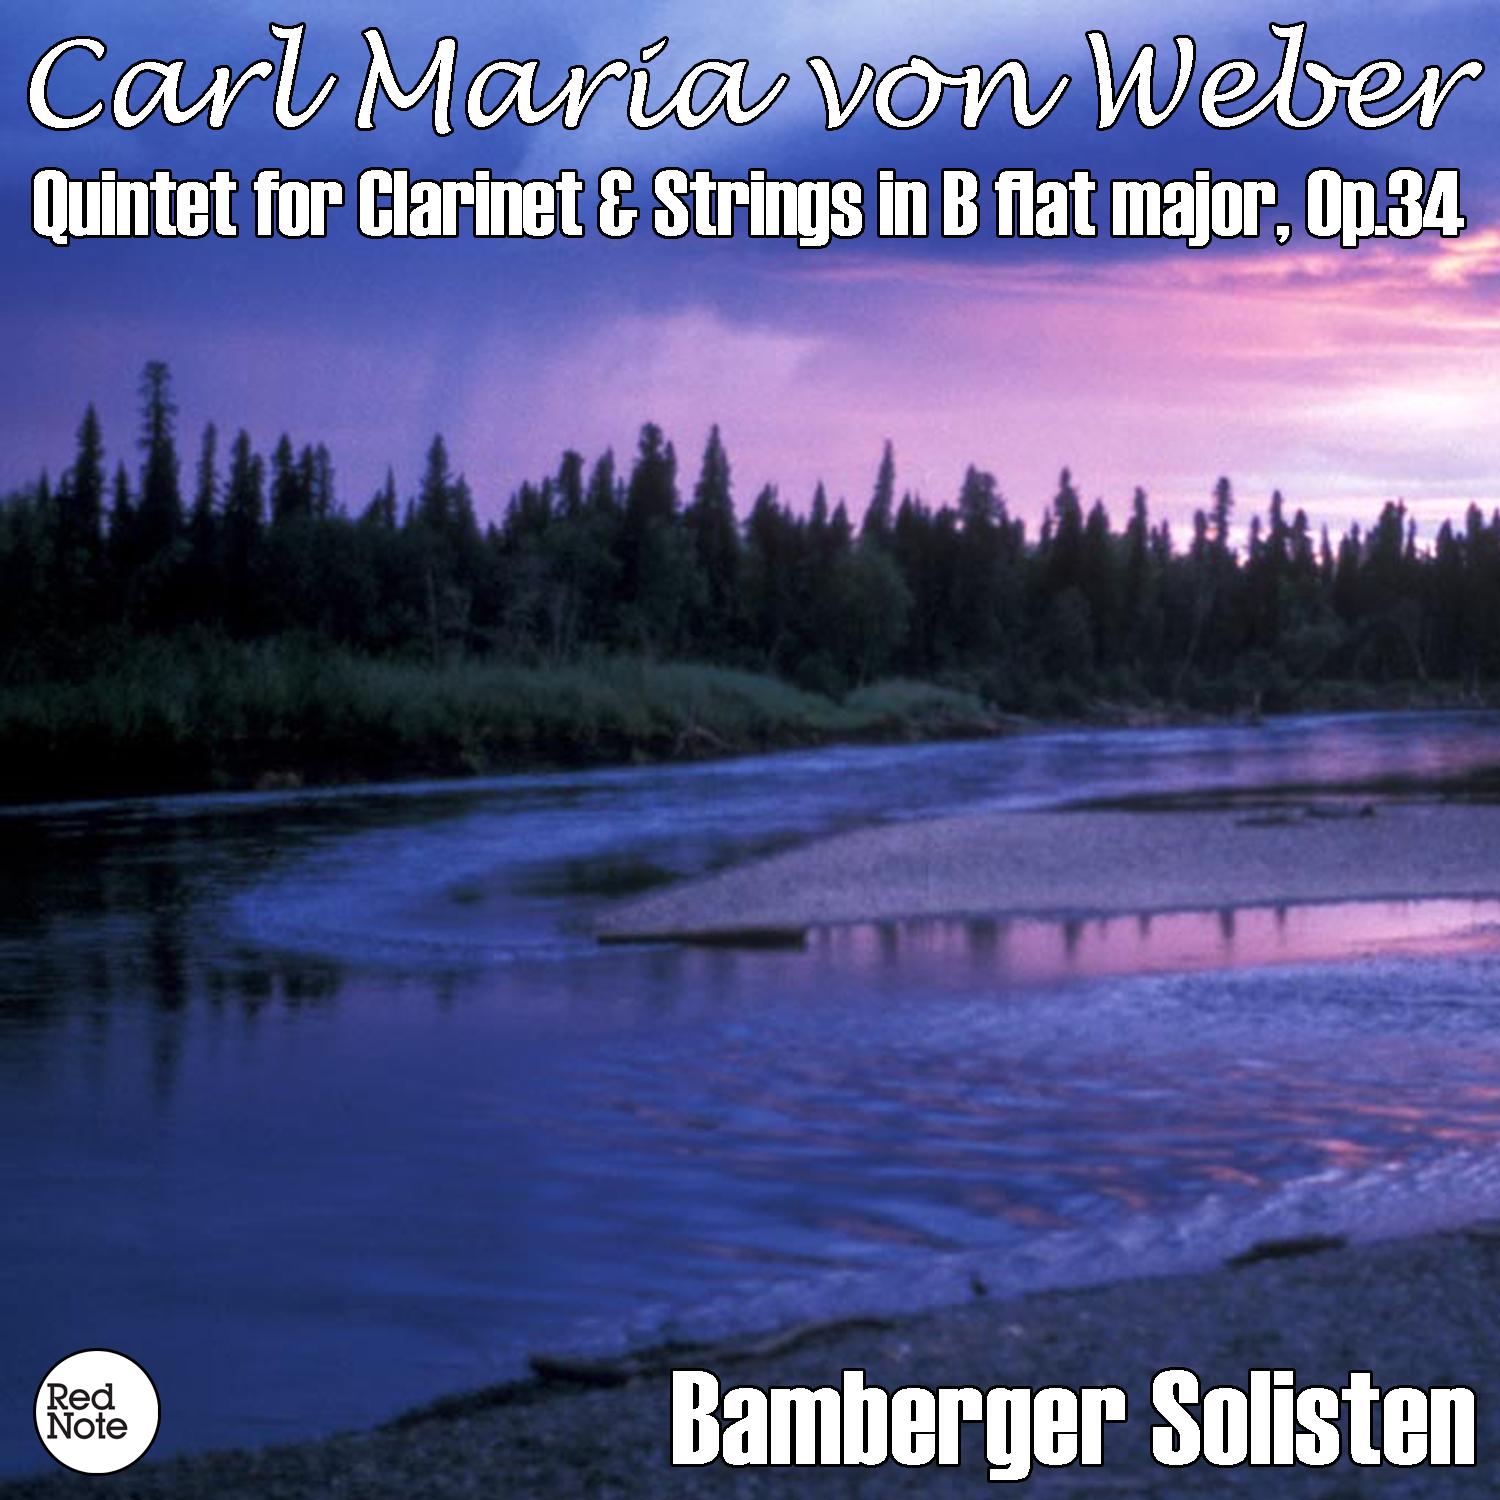 Weber: Quintet for Clarinet & Strings in B flat major, Op.34